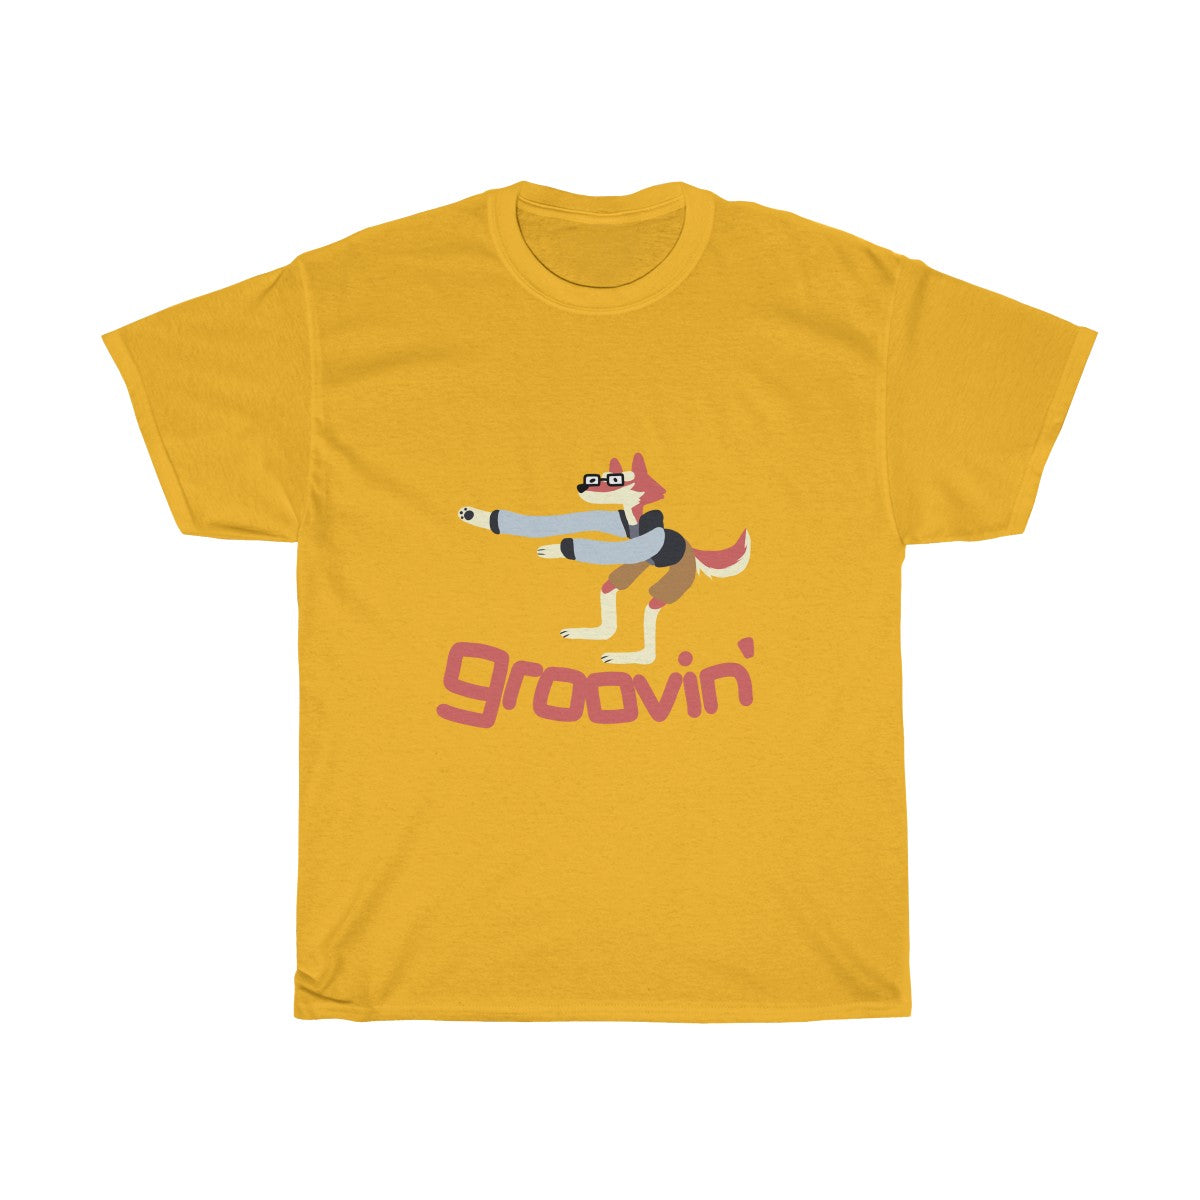 Groovin - T-Shirt T-Shirt Ooka Gold S 